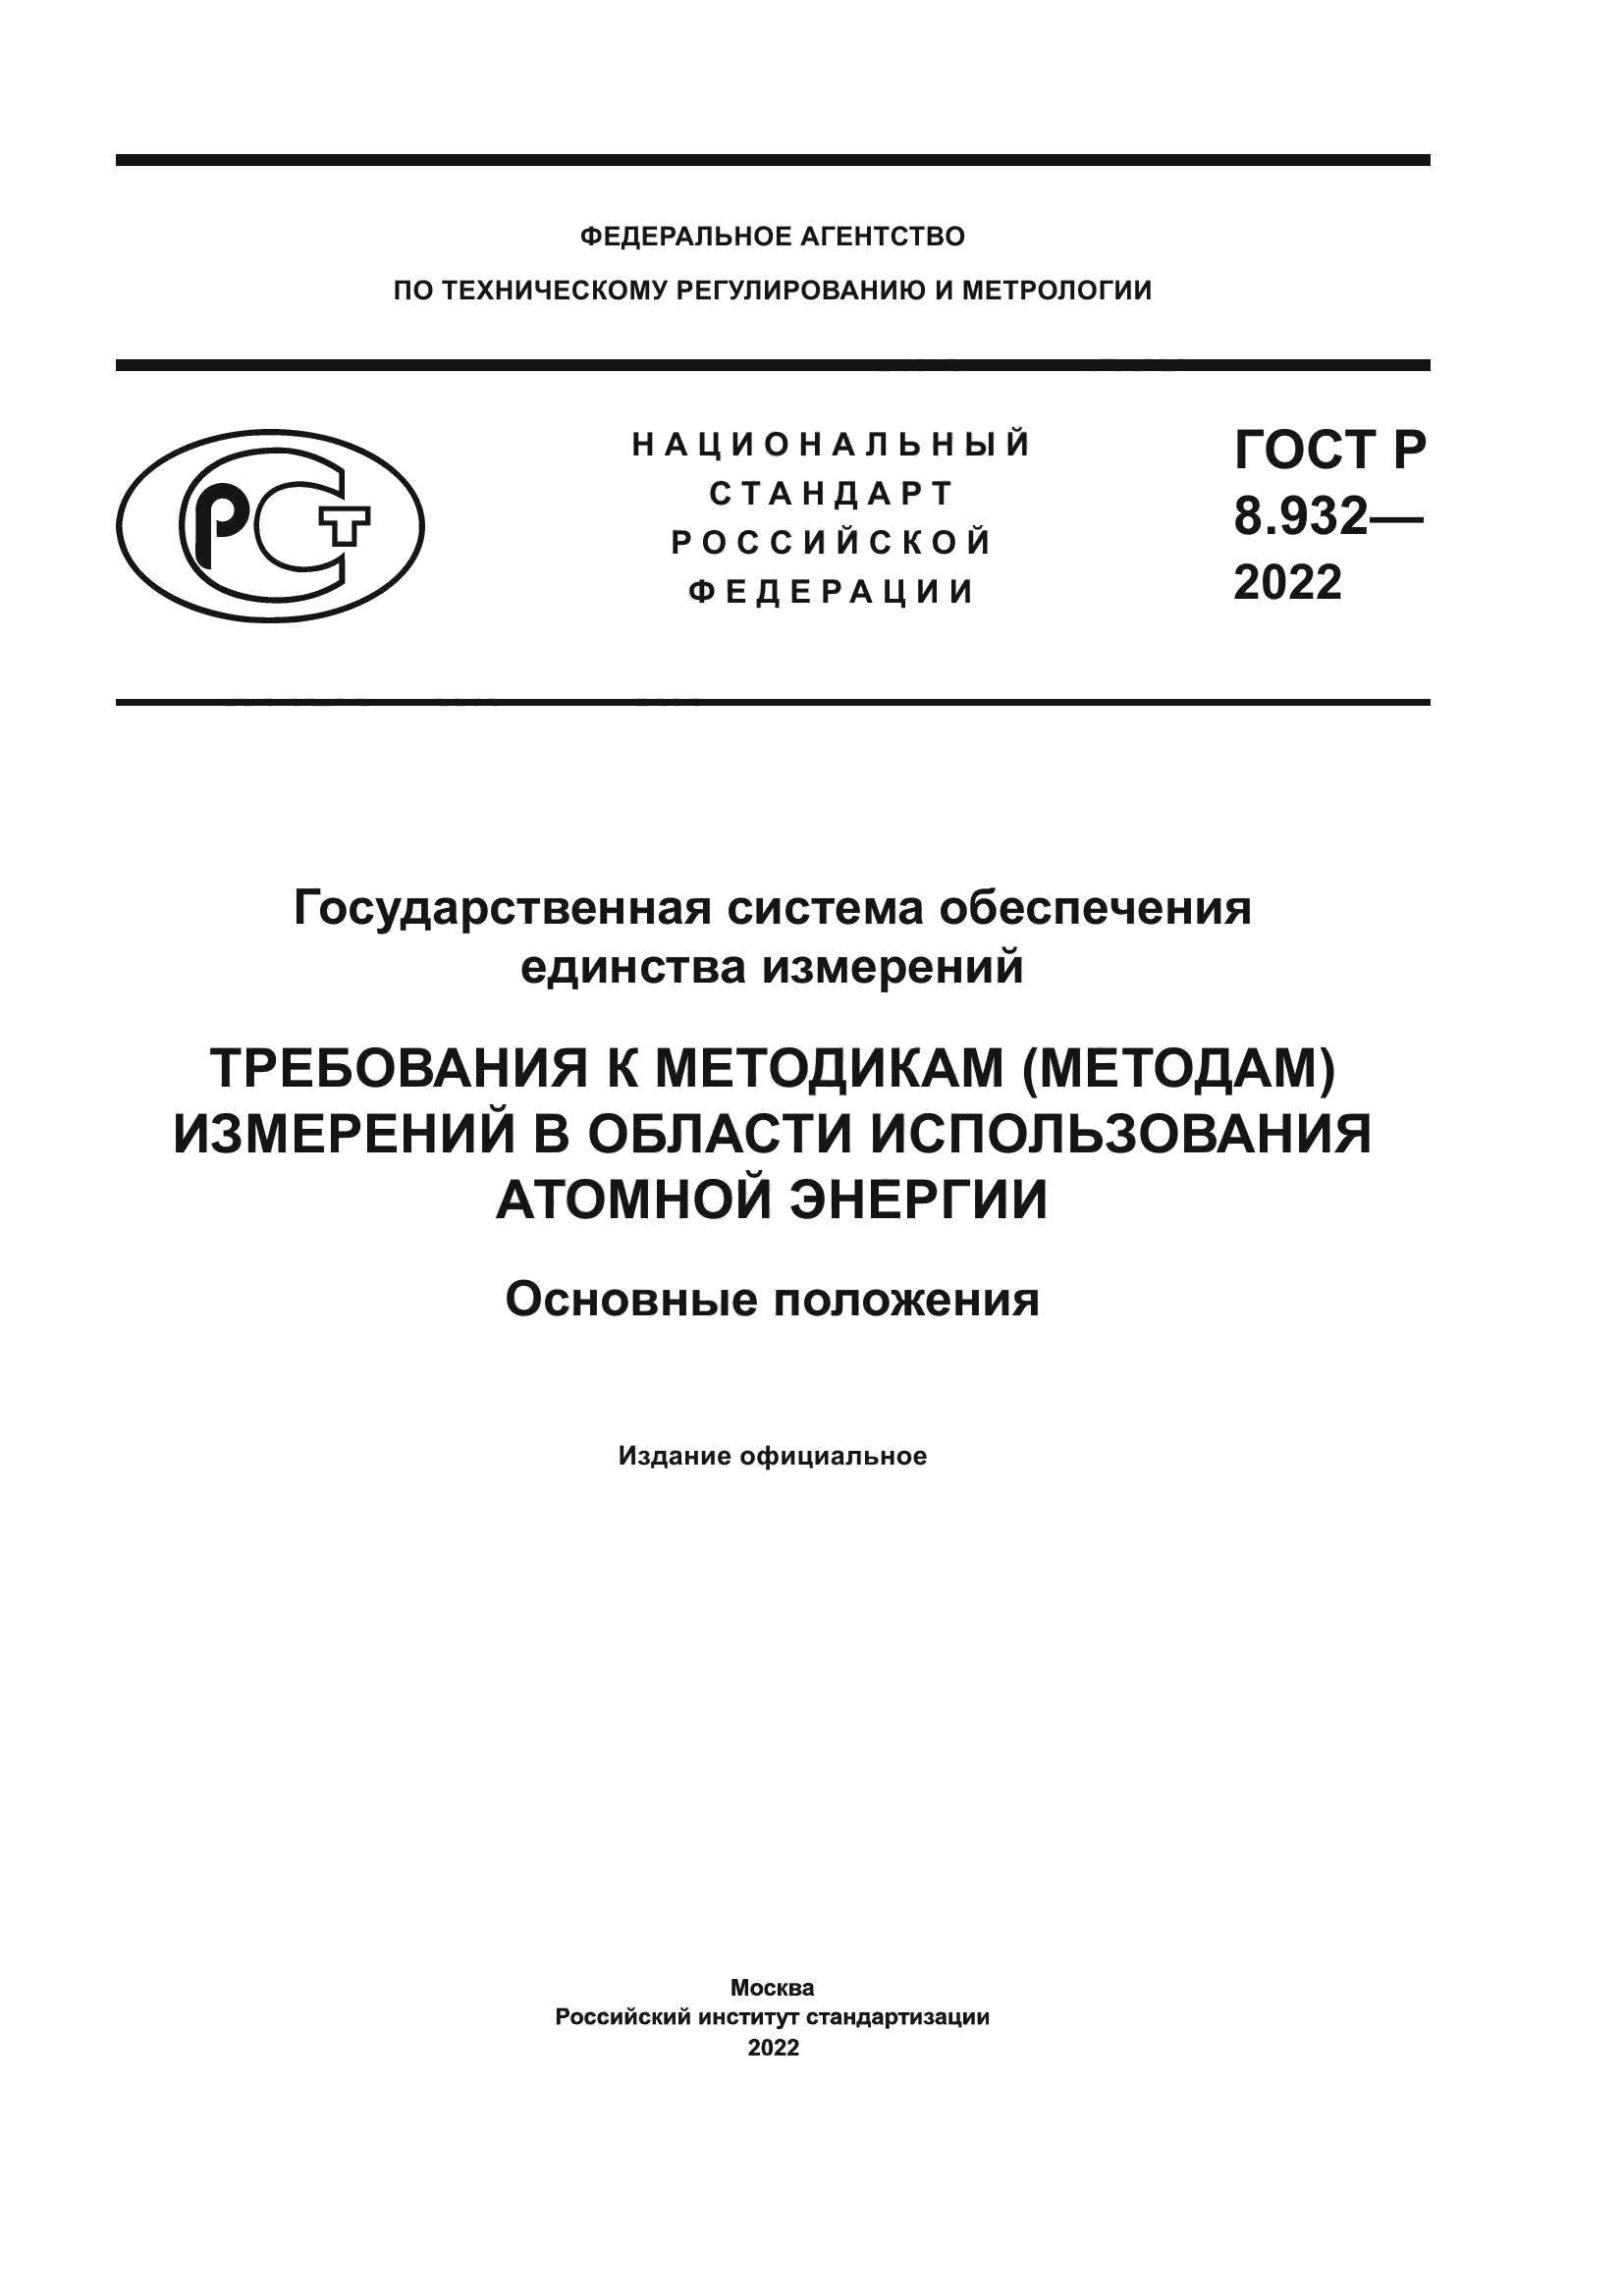 ГОСТ Р 8.932-2022